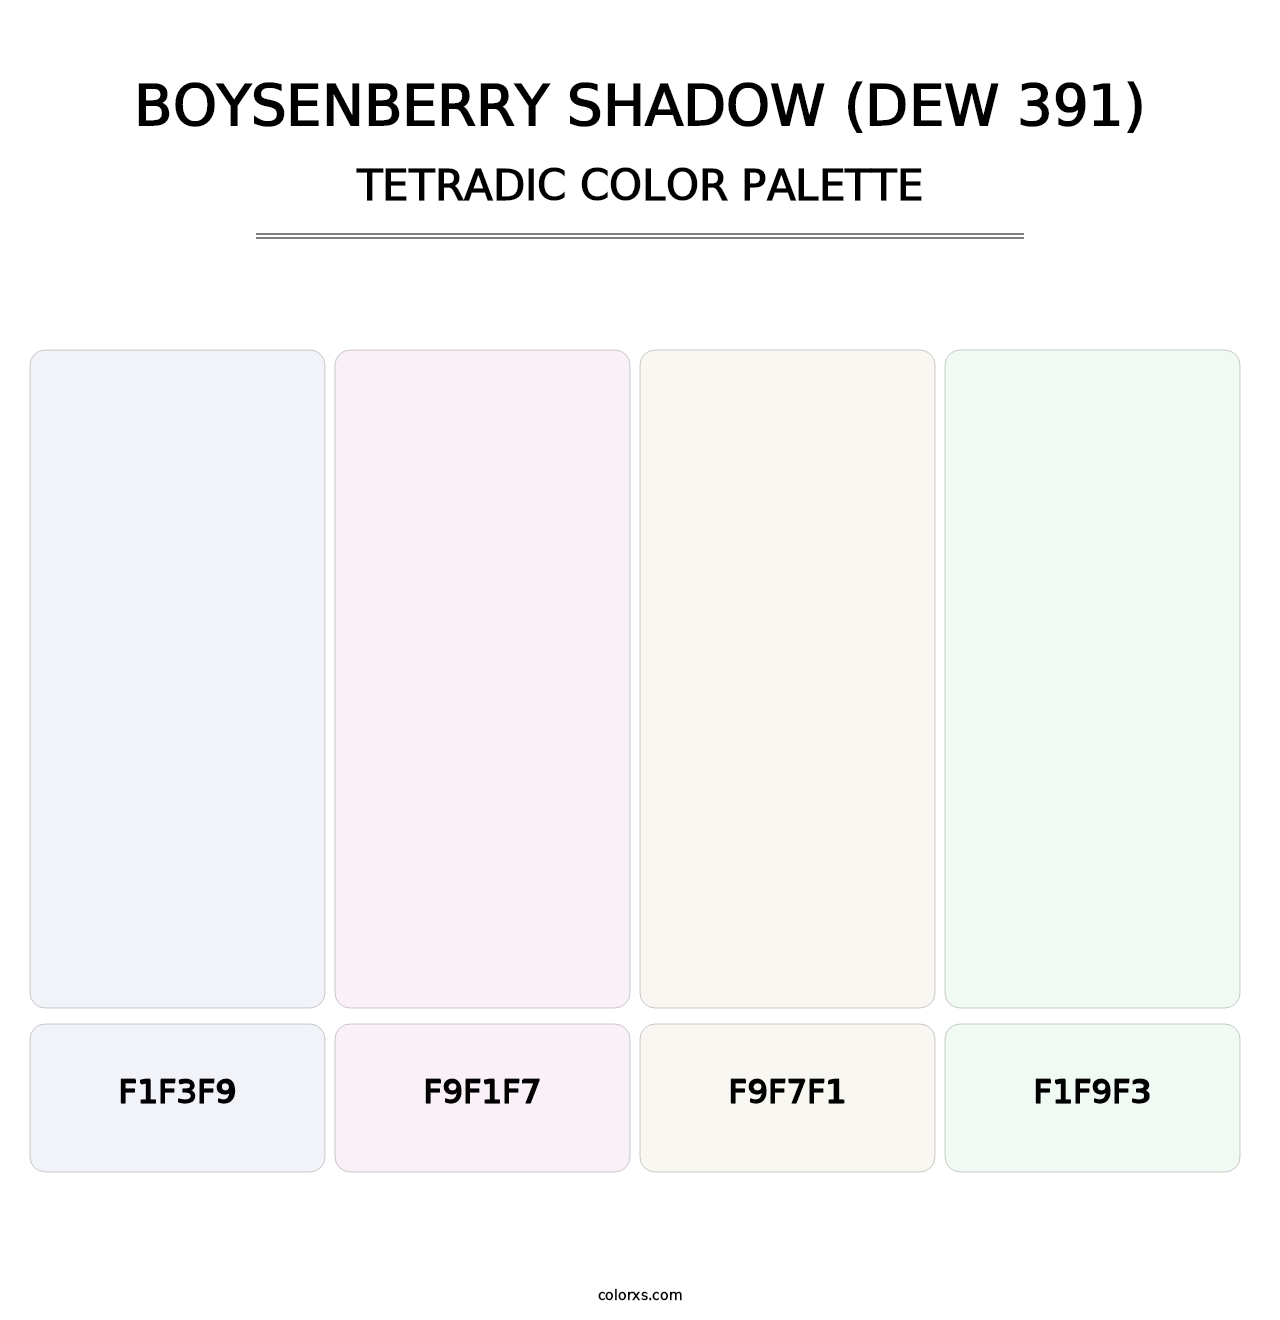 Boysenberry Shadow (DEW 391) - Tetradic Color Palette